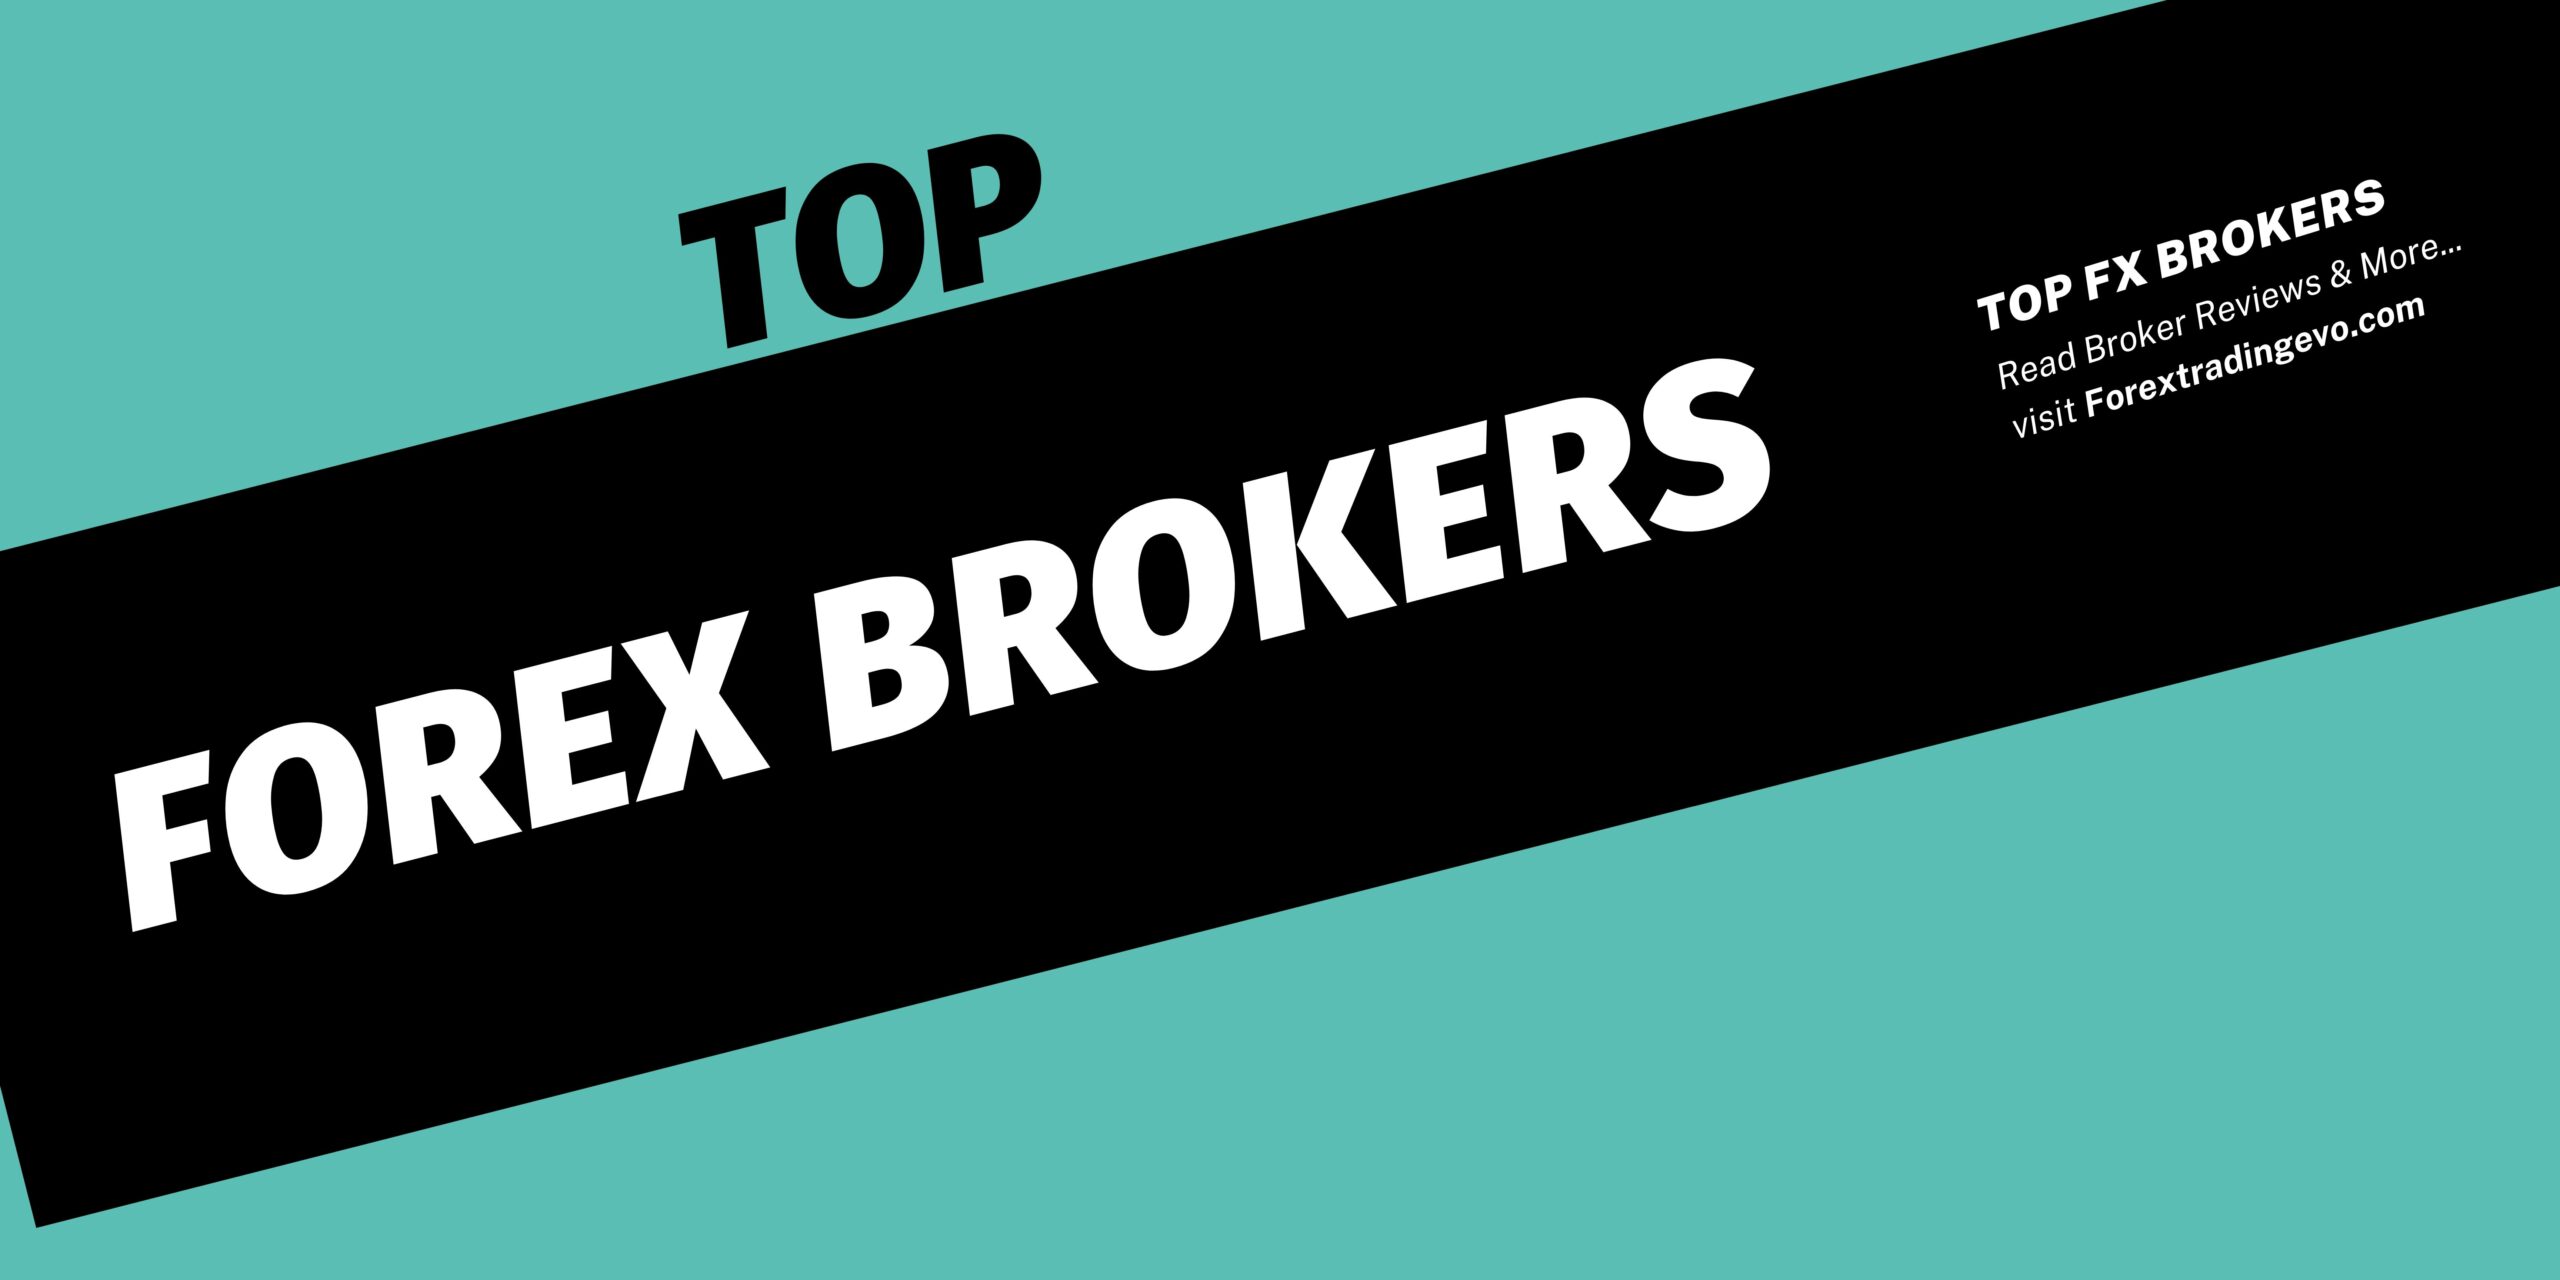 List of best forex broker - forextradingevo 31 images